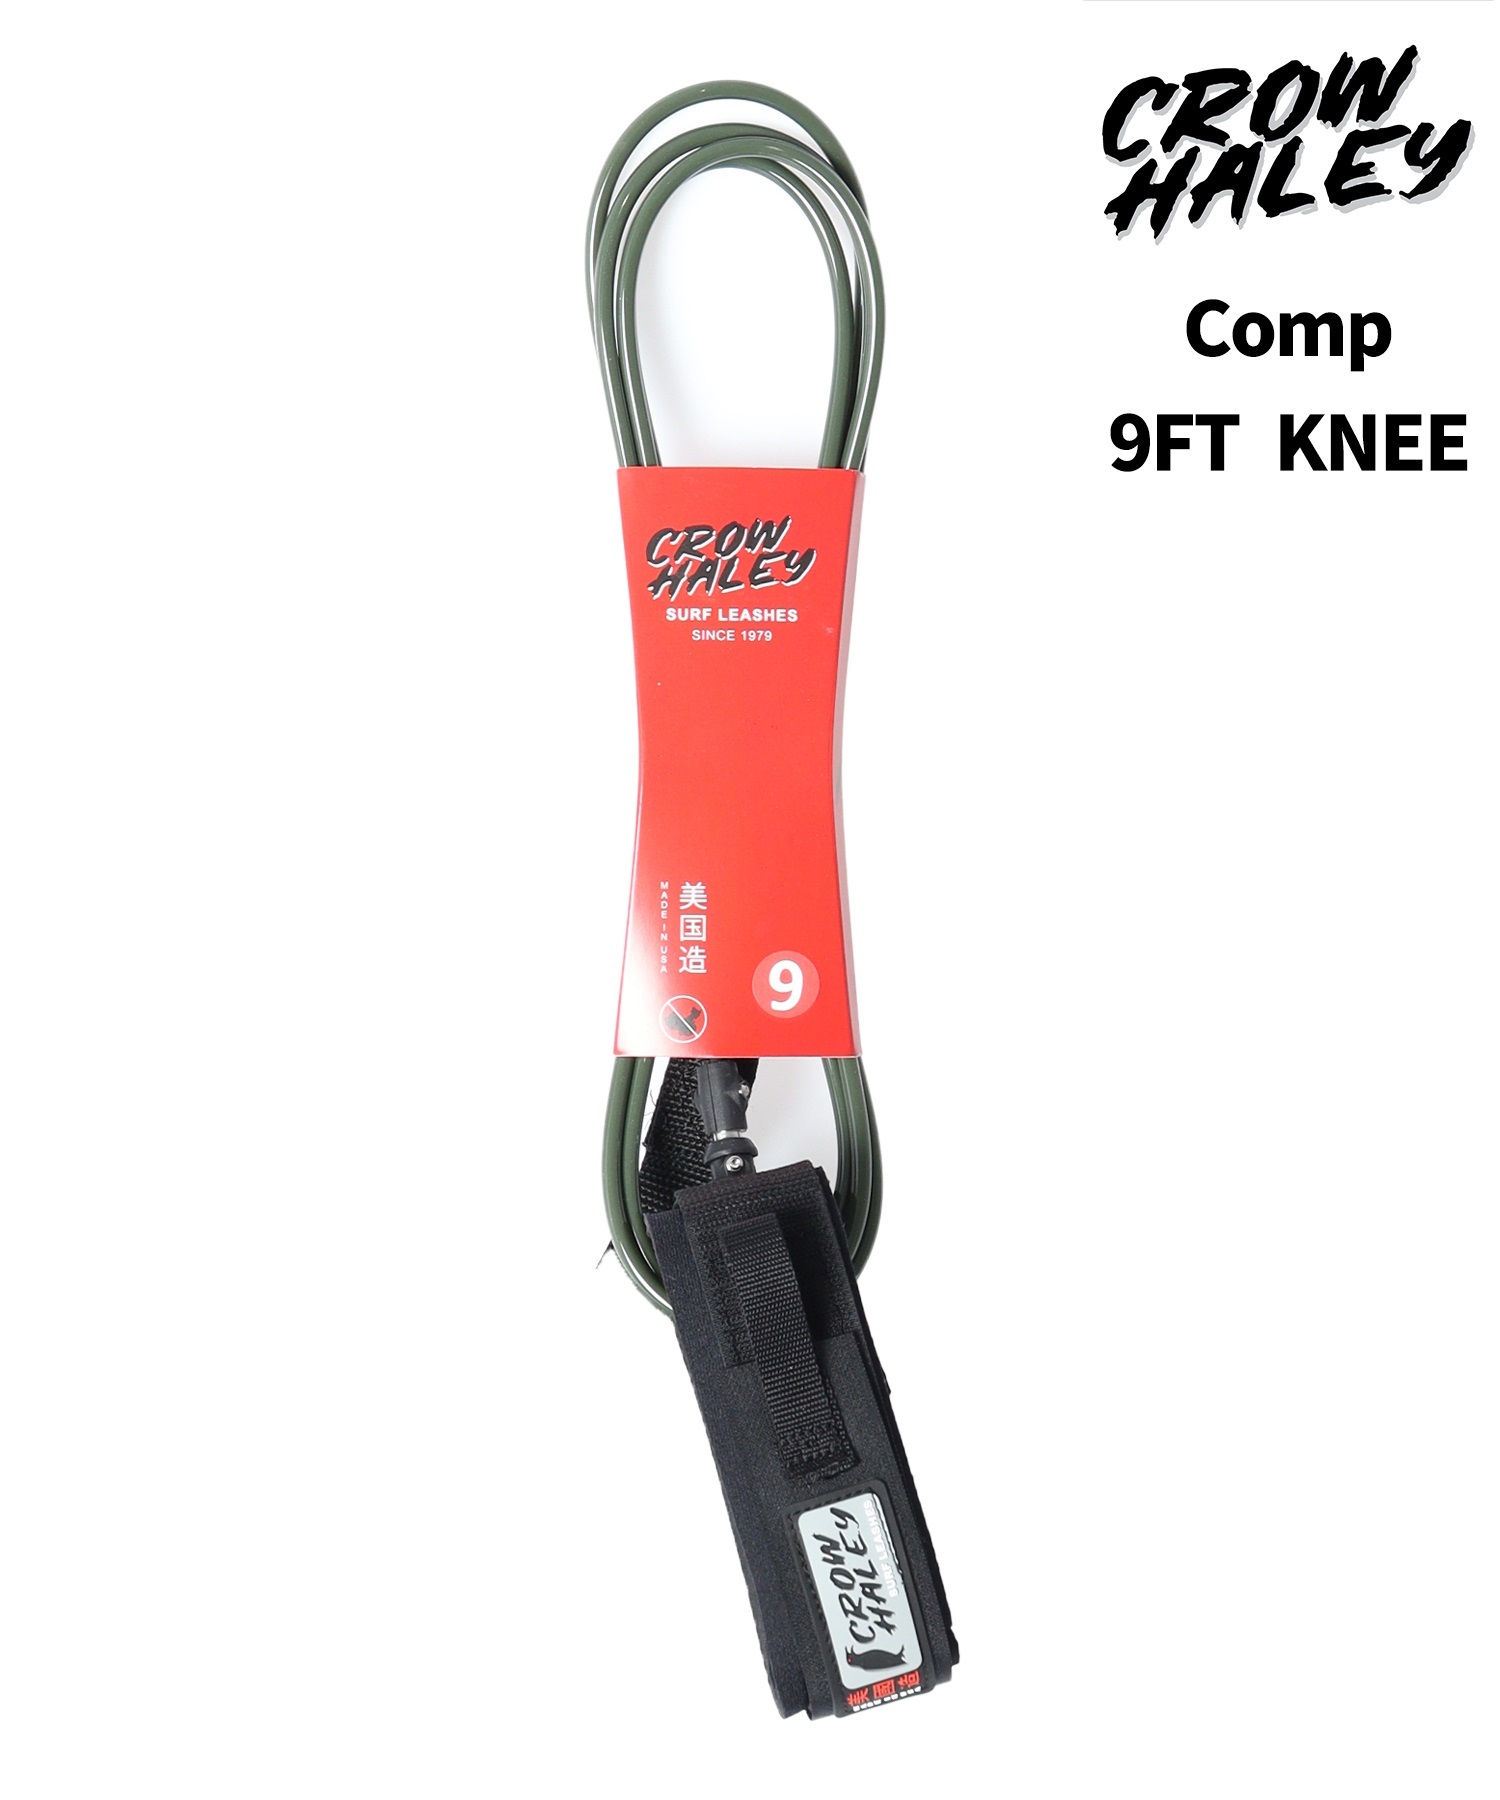 CLOW HALEY クロウ ハーレー COMP 9.0FT KNEE 膝用 リーシュコード ロングボード サーフィン ムラサキスポーツ(GRN-9.0)